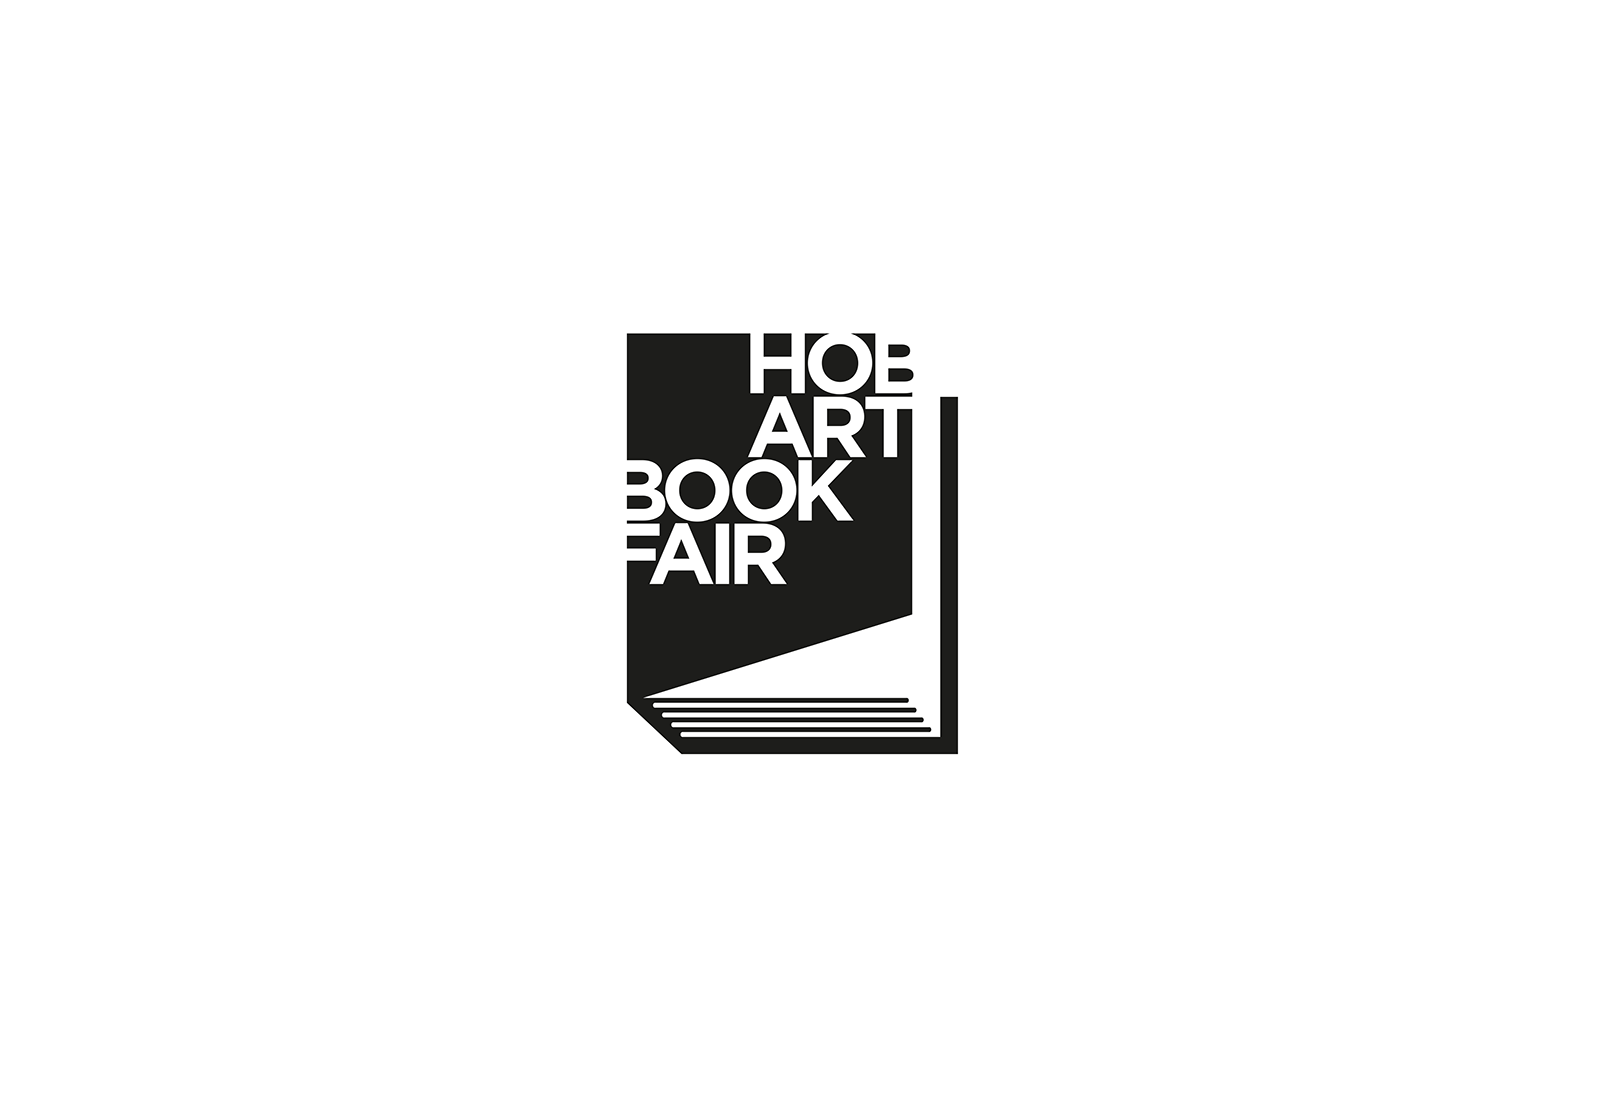 Hobart Art Book Fair